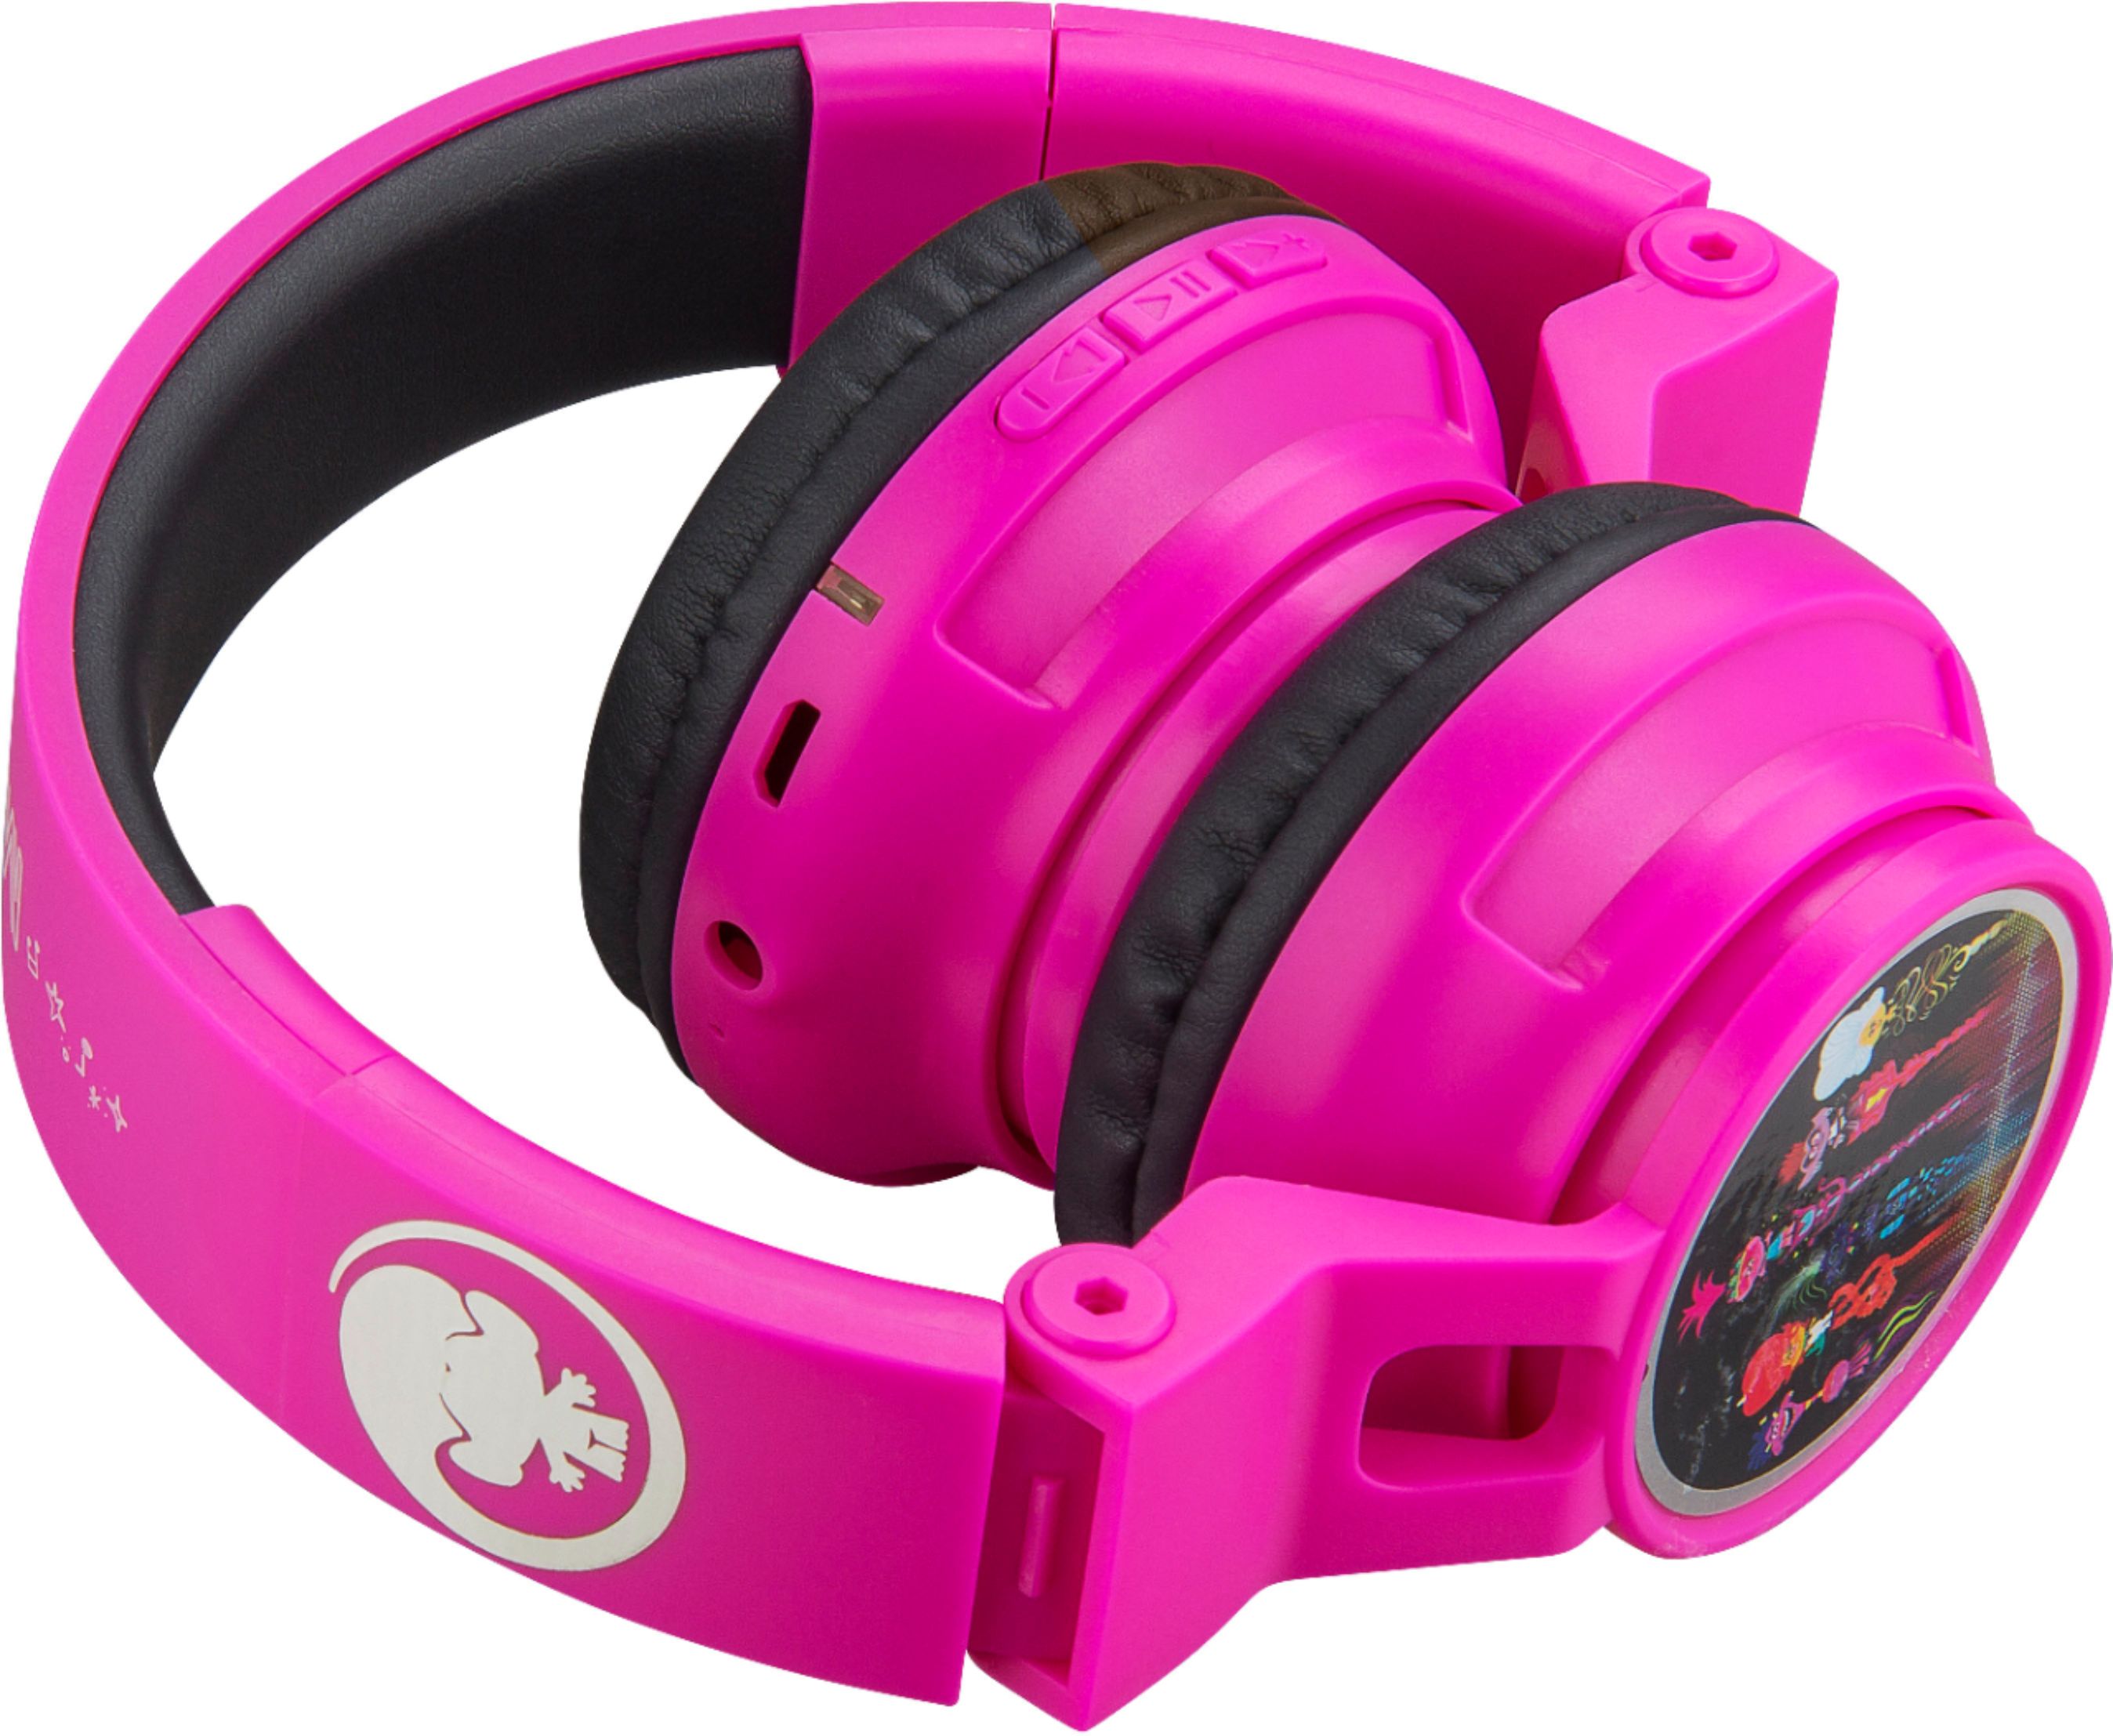 Over-the-Ear Trolls Wireless Best World Pink/Black Tour Headphones Buy: